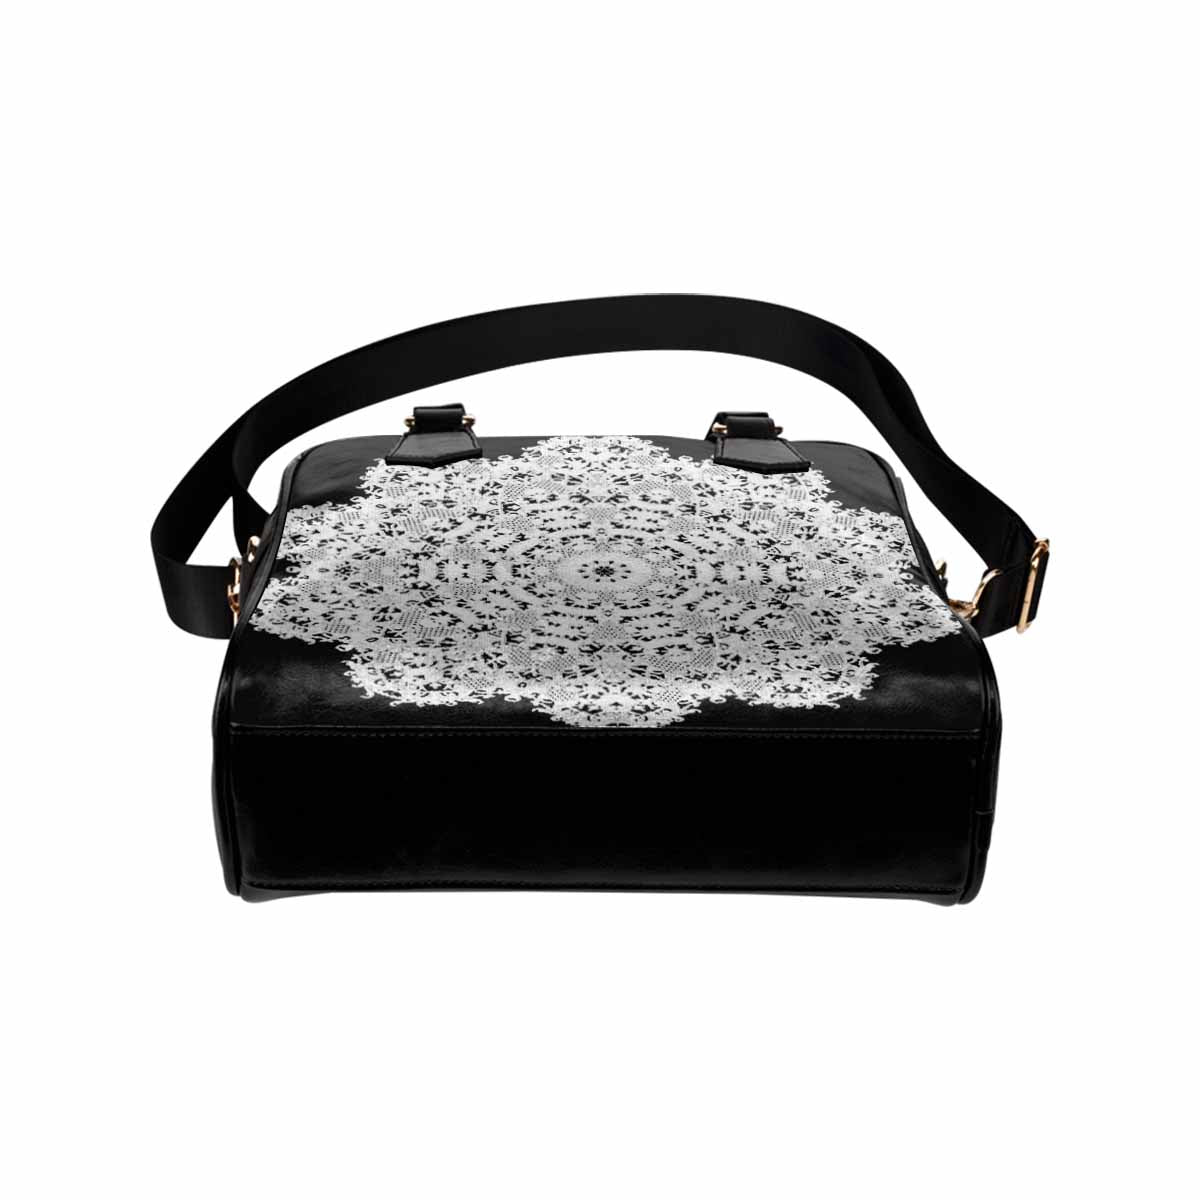 Victorian lace print, cute handbag, Mod 19163453, design 50